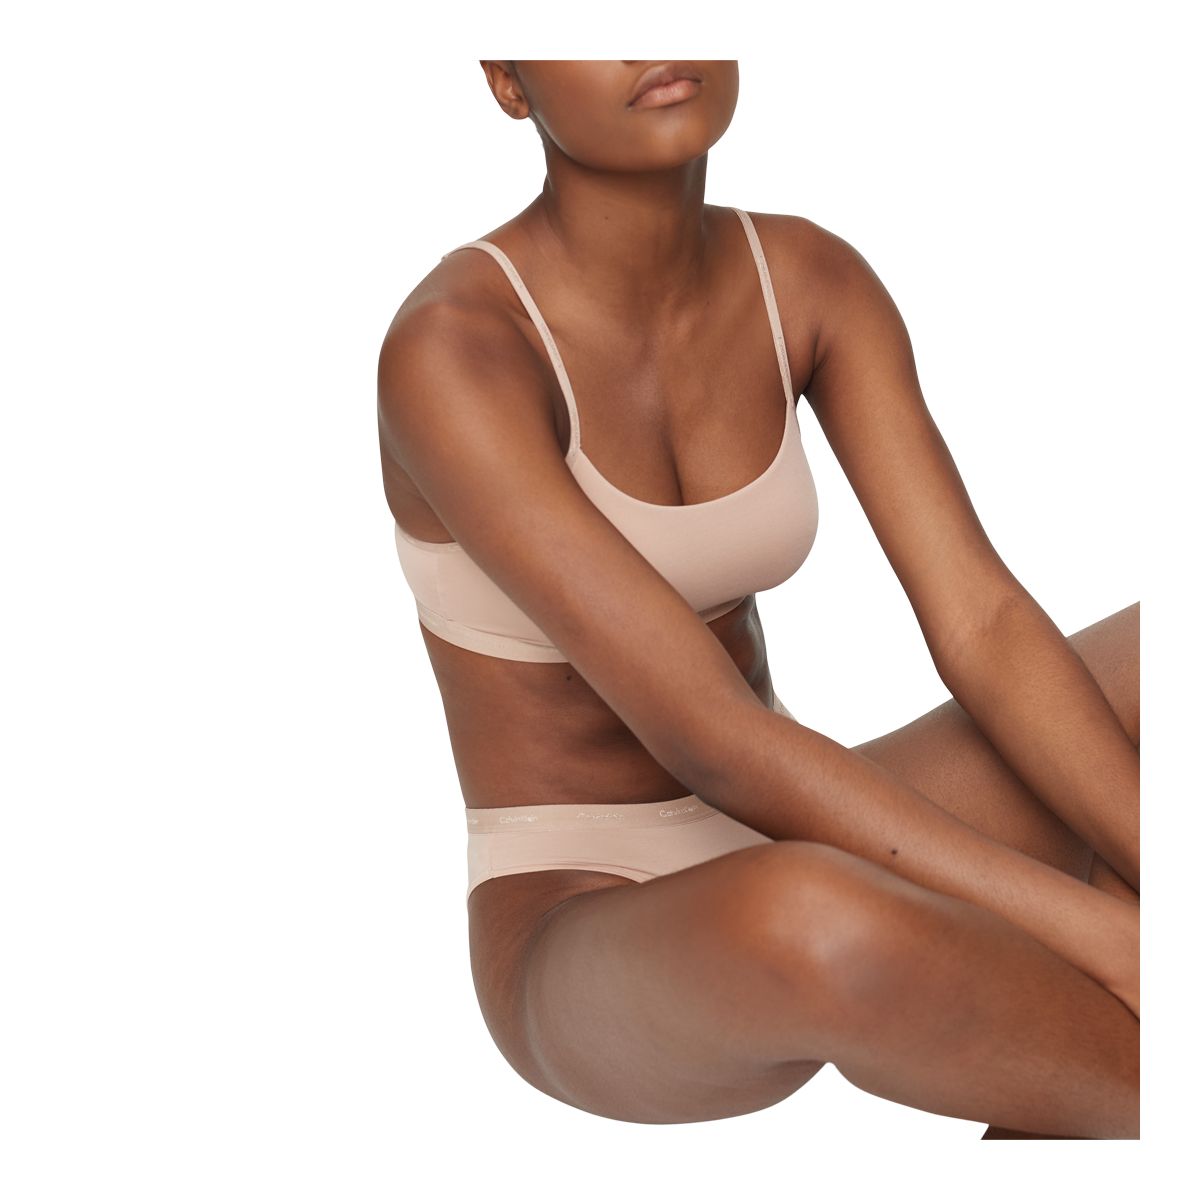 Calvin Klein - Women's Bra - Unlined Bralette - Everyday Comfort